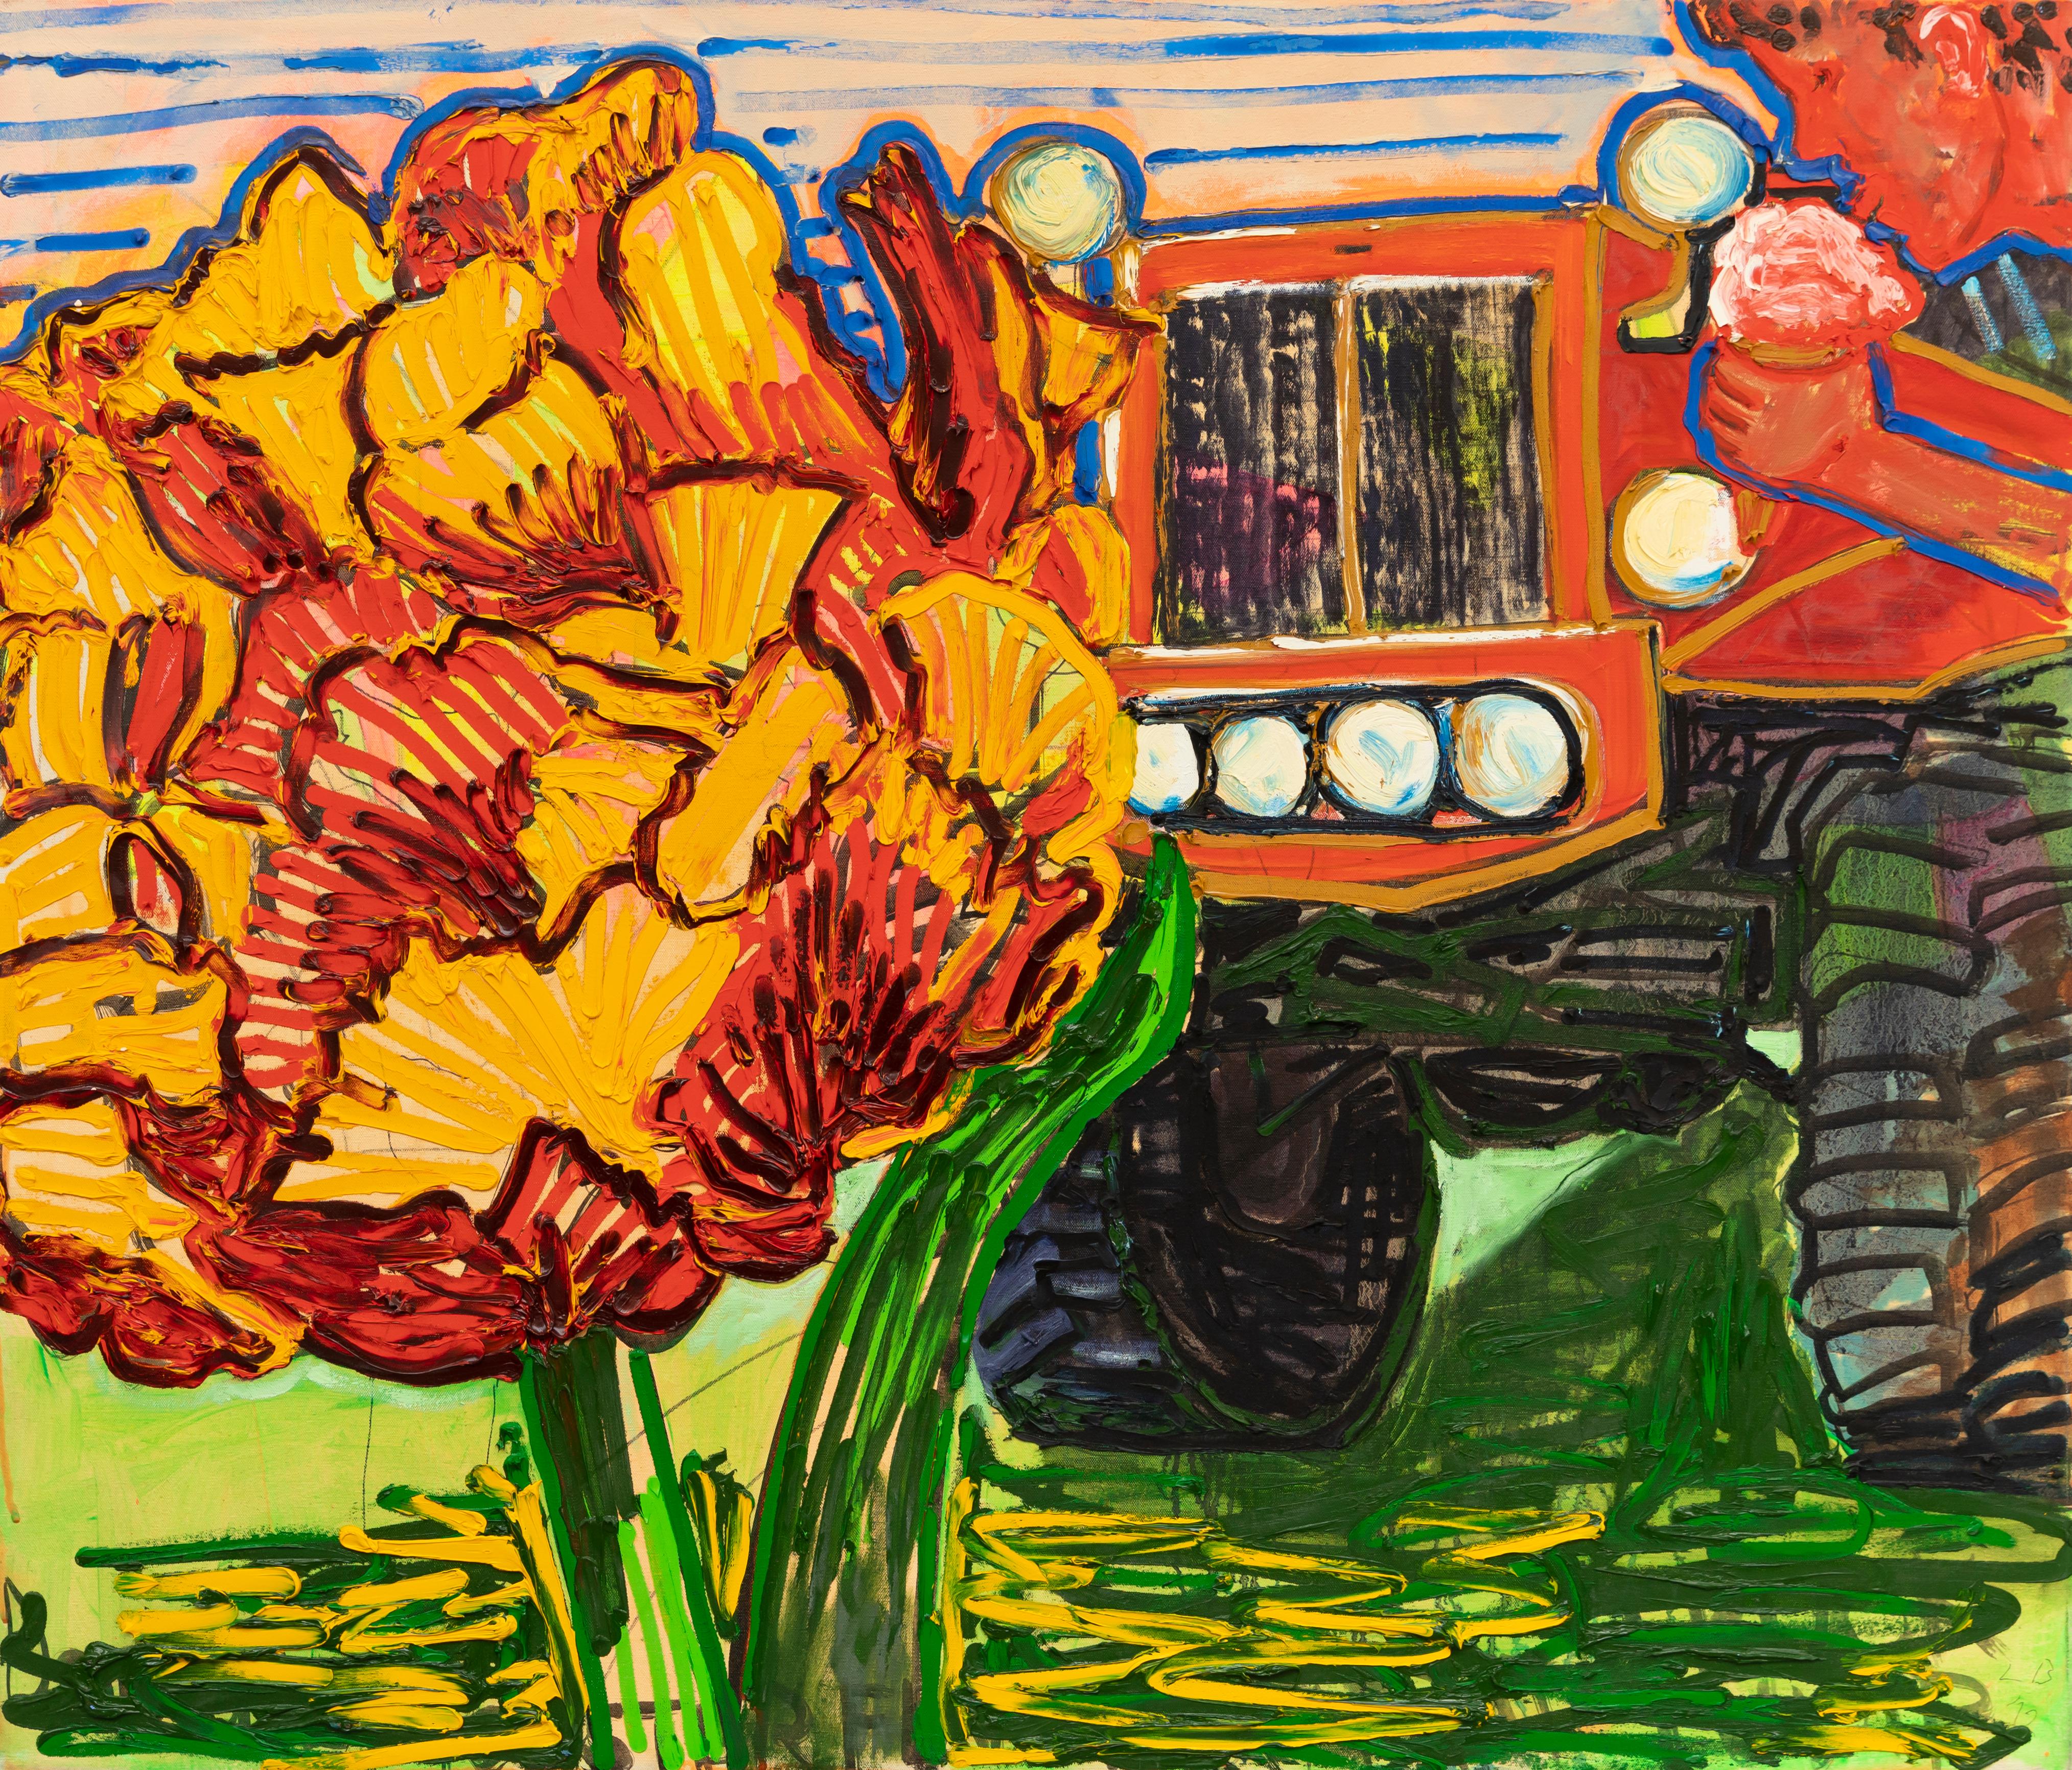 Leslie Bostrom, Tulip, Truck, Ice Cream, Oil on Canvas, 2012